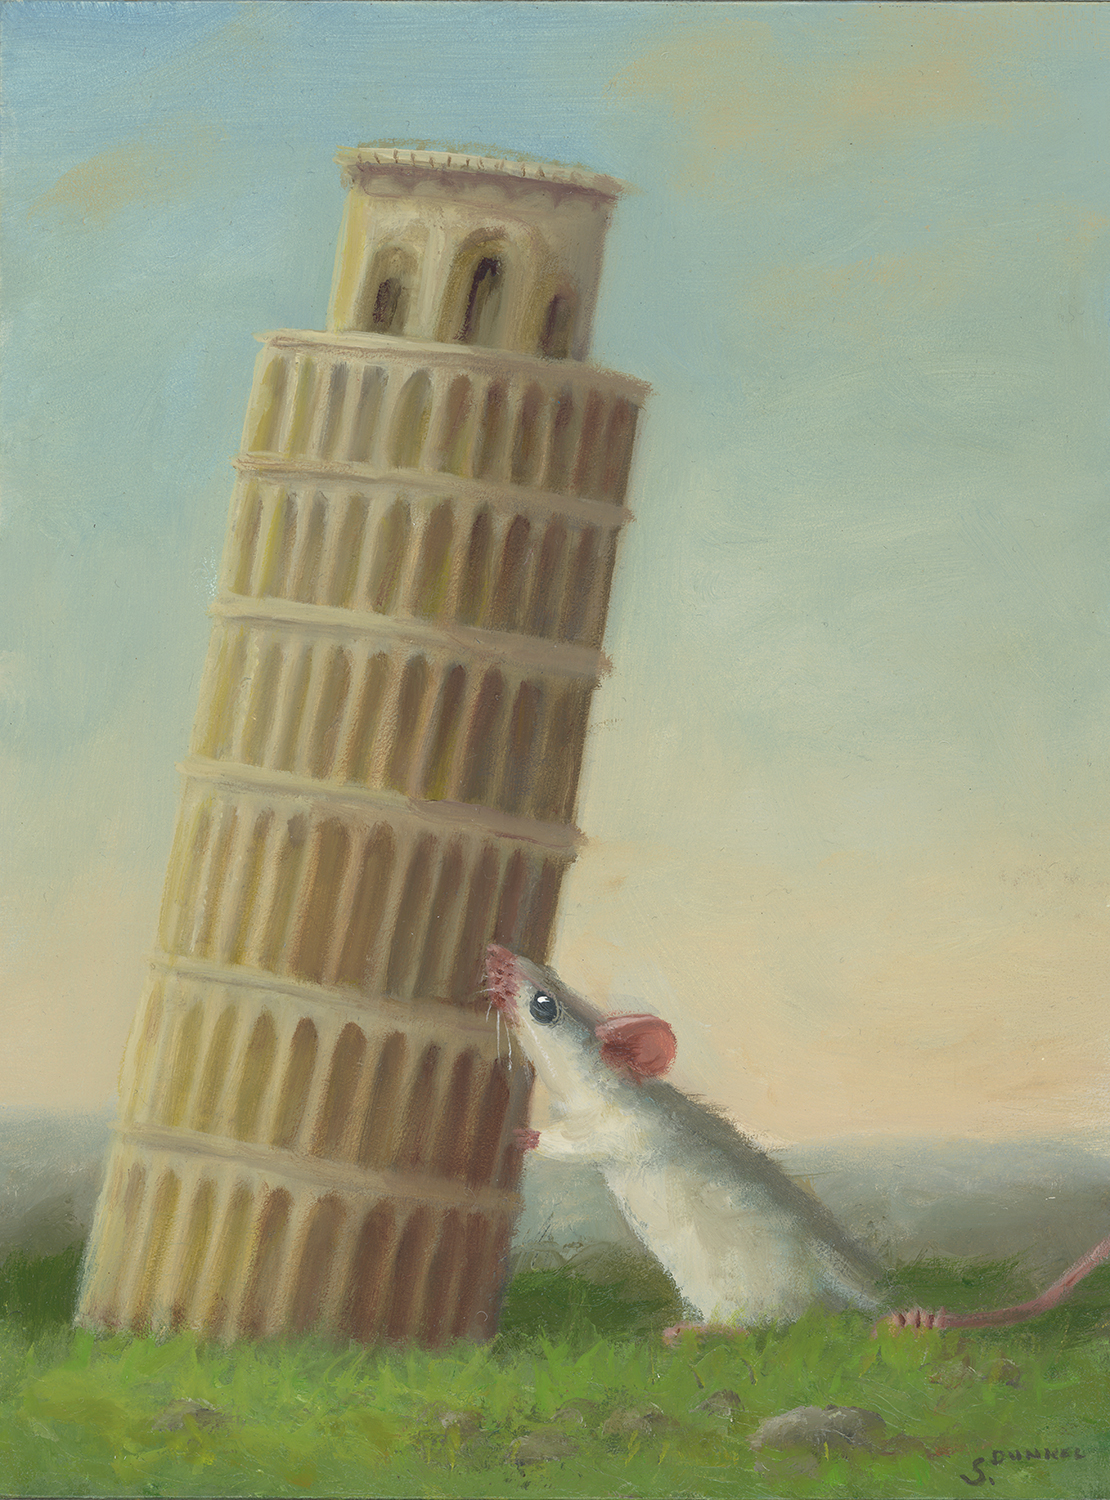 Contemporary art - Stuart Dunkel, "Saving Pisa," Oil on panel, 8 x 6 inches